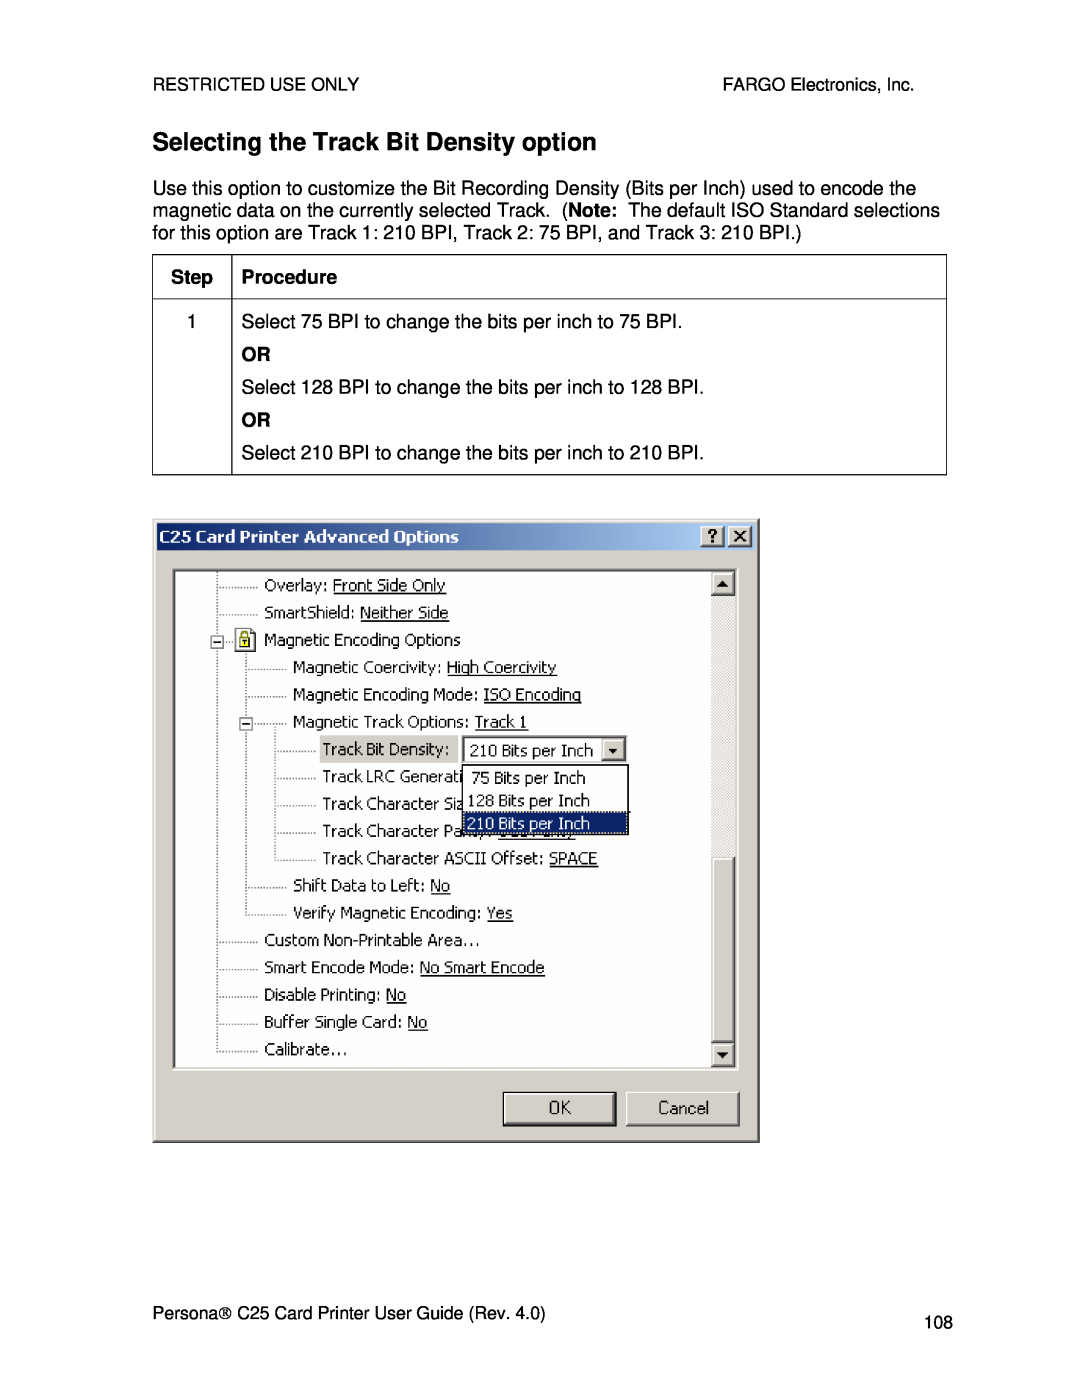 FARGO electronic S000256 manual Selecting the Track Bit Density option 